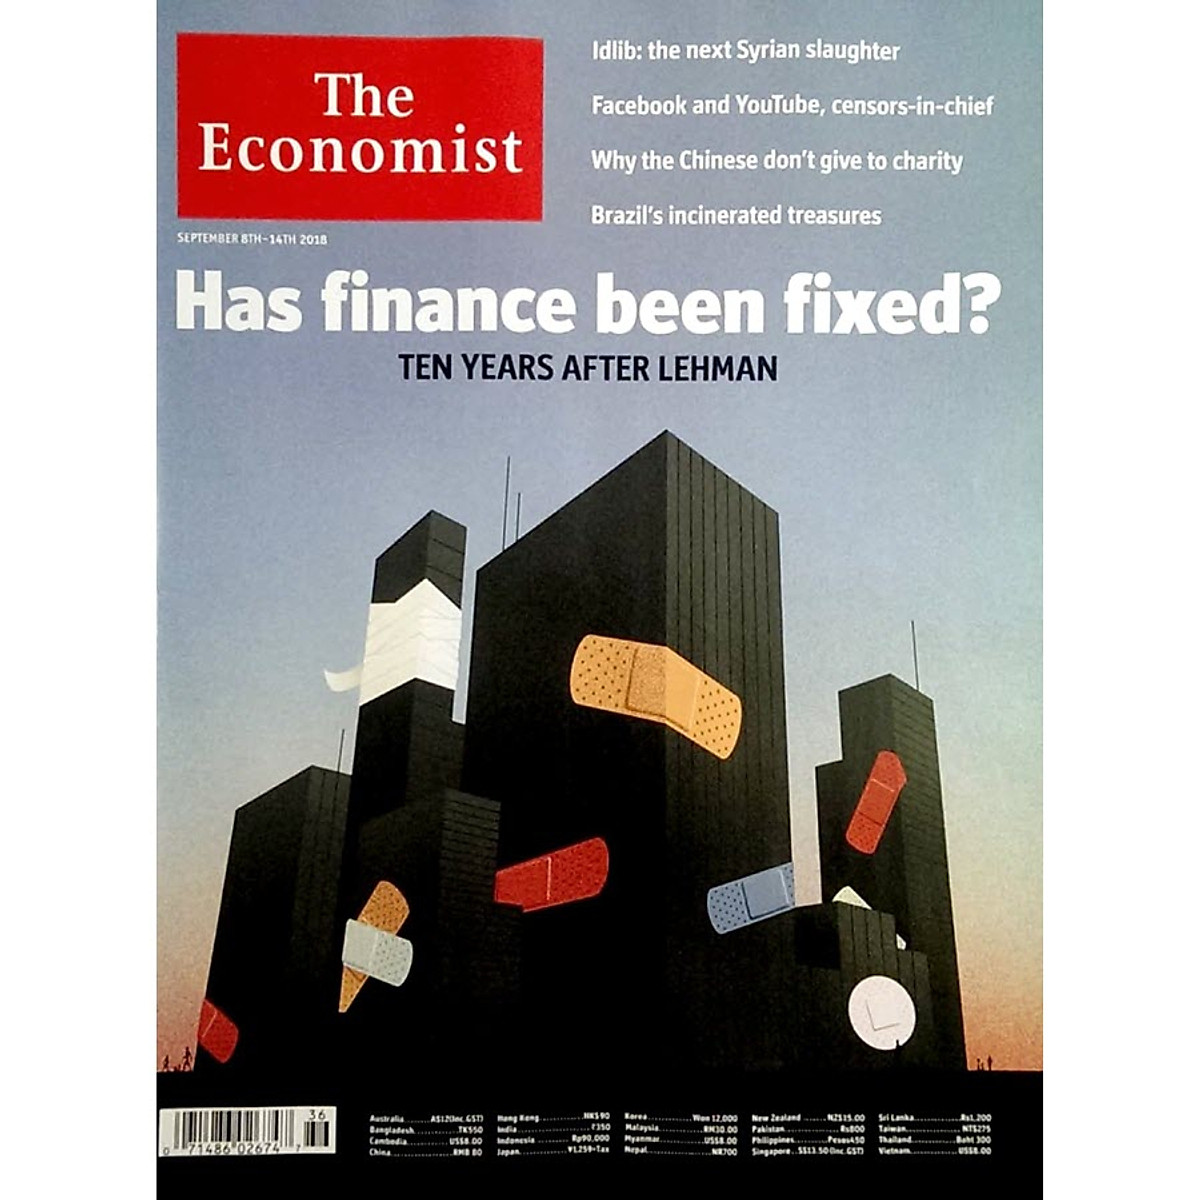 The Economist: Has finance been fixed? - 36